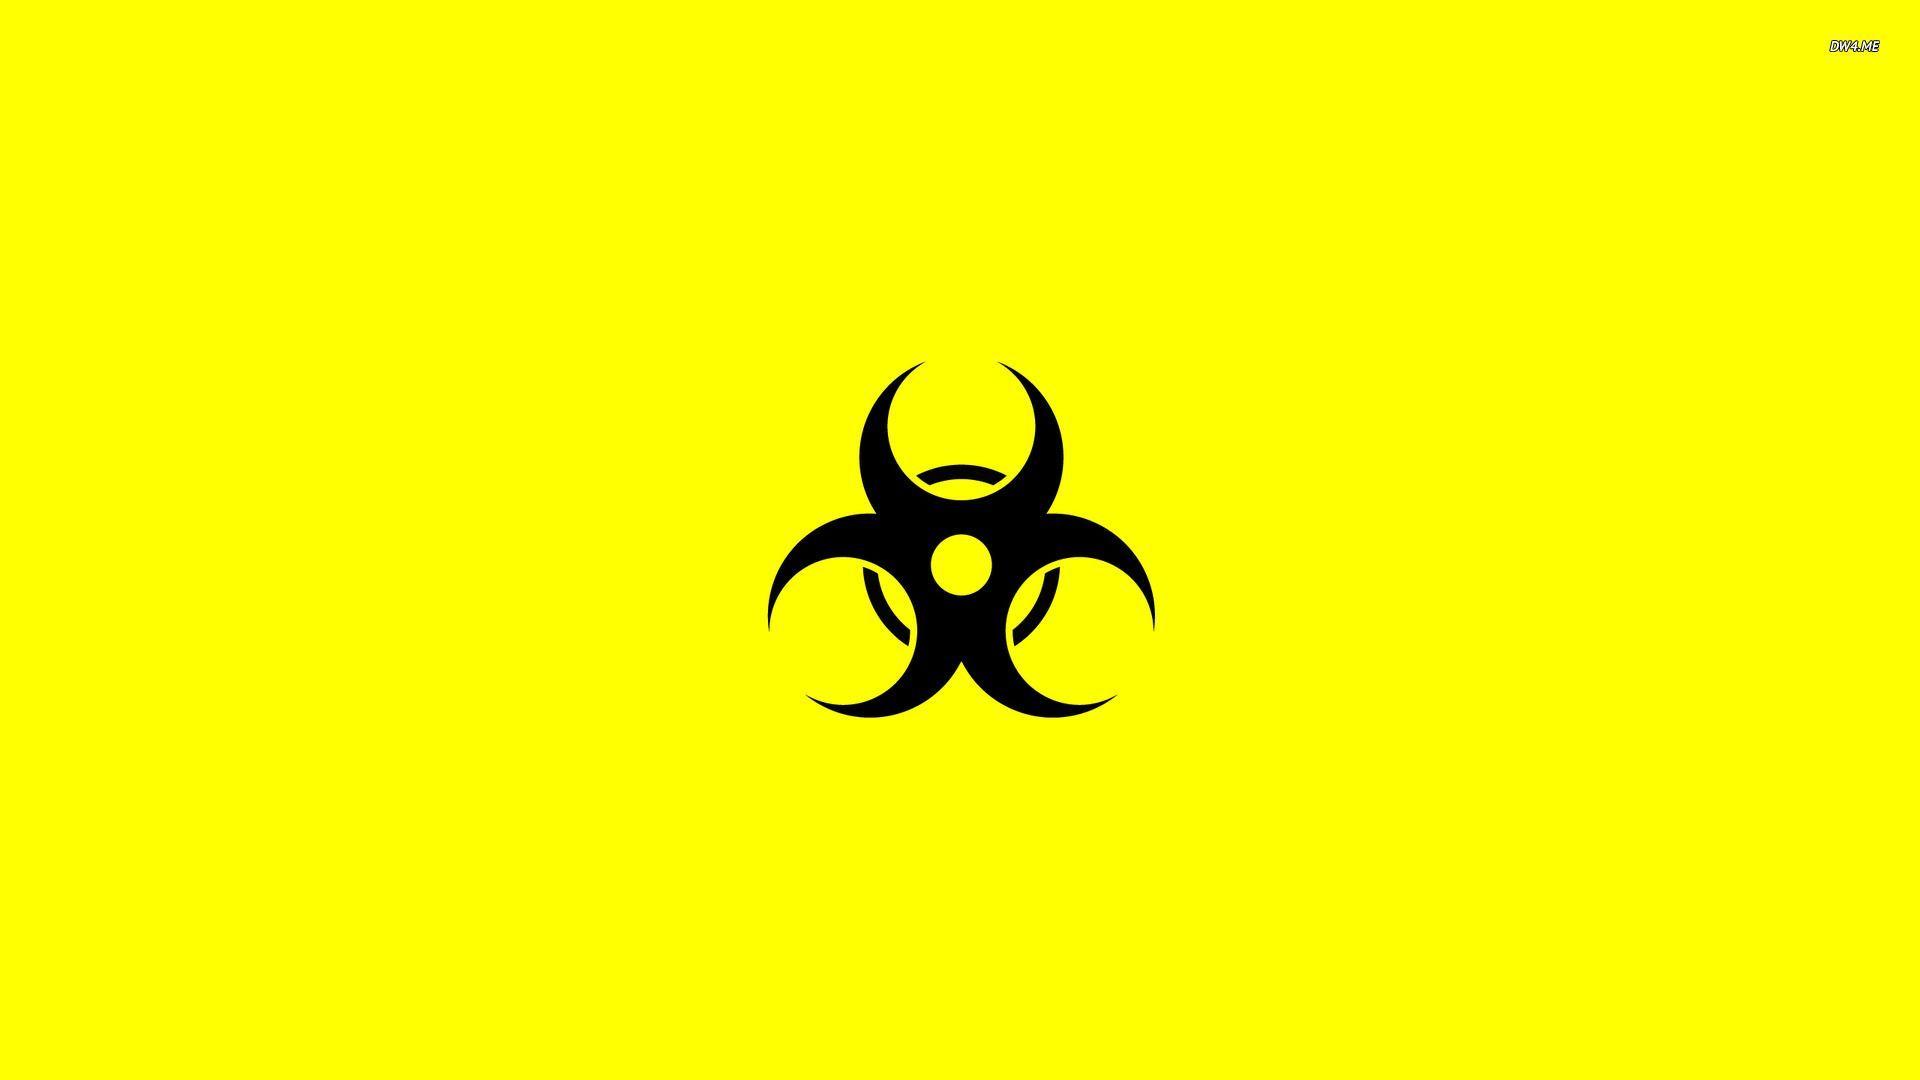 Wallpapers For > Biohazard Symbol Wallpapers